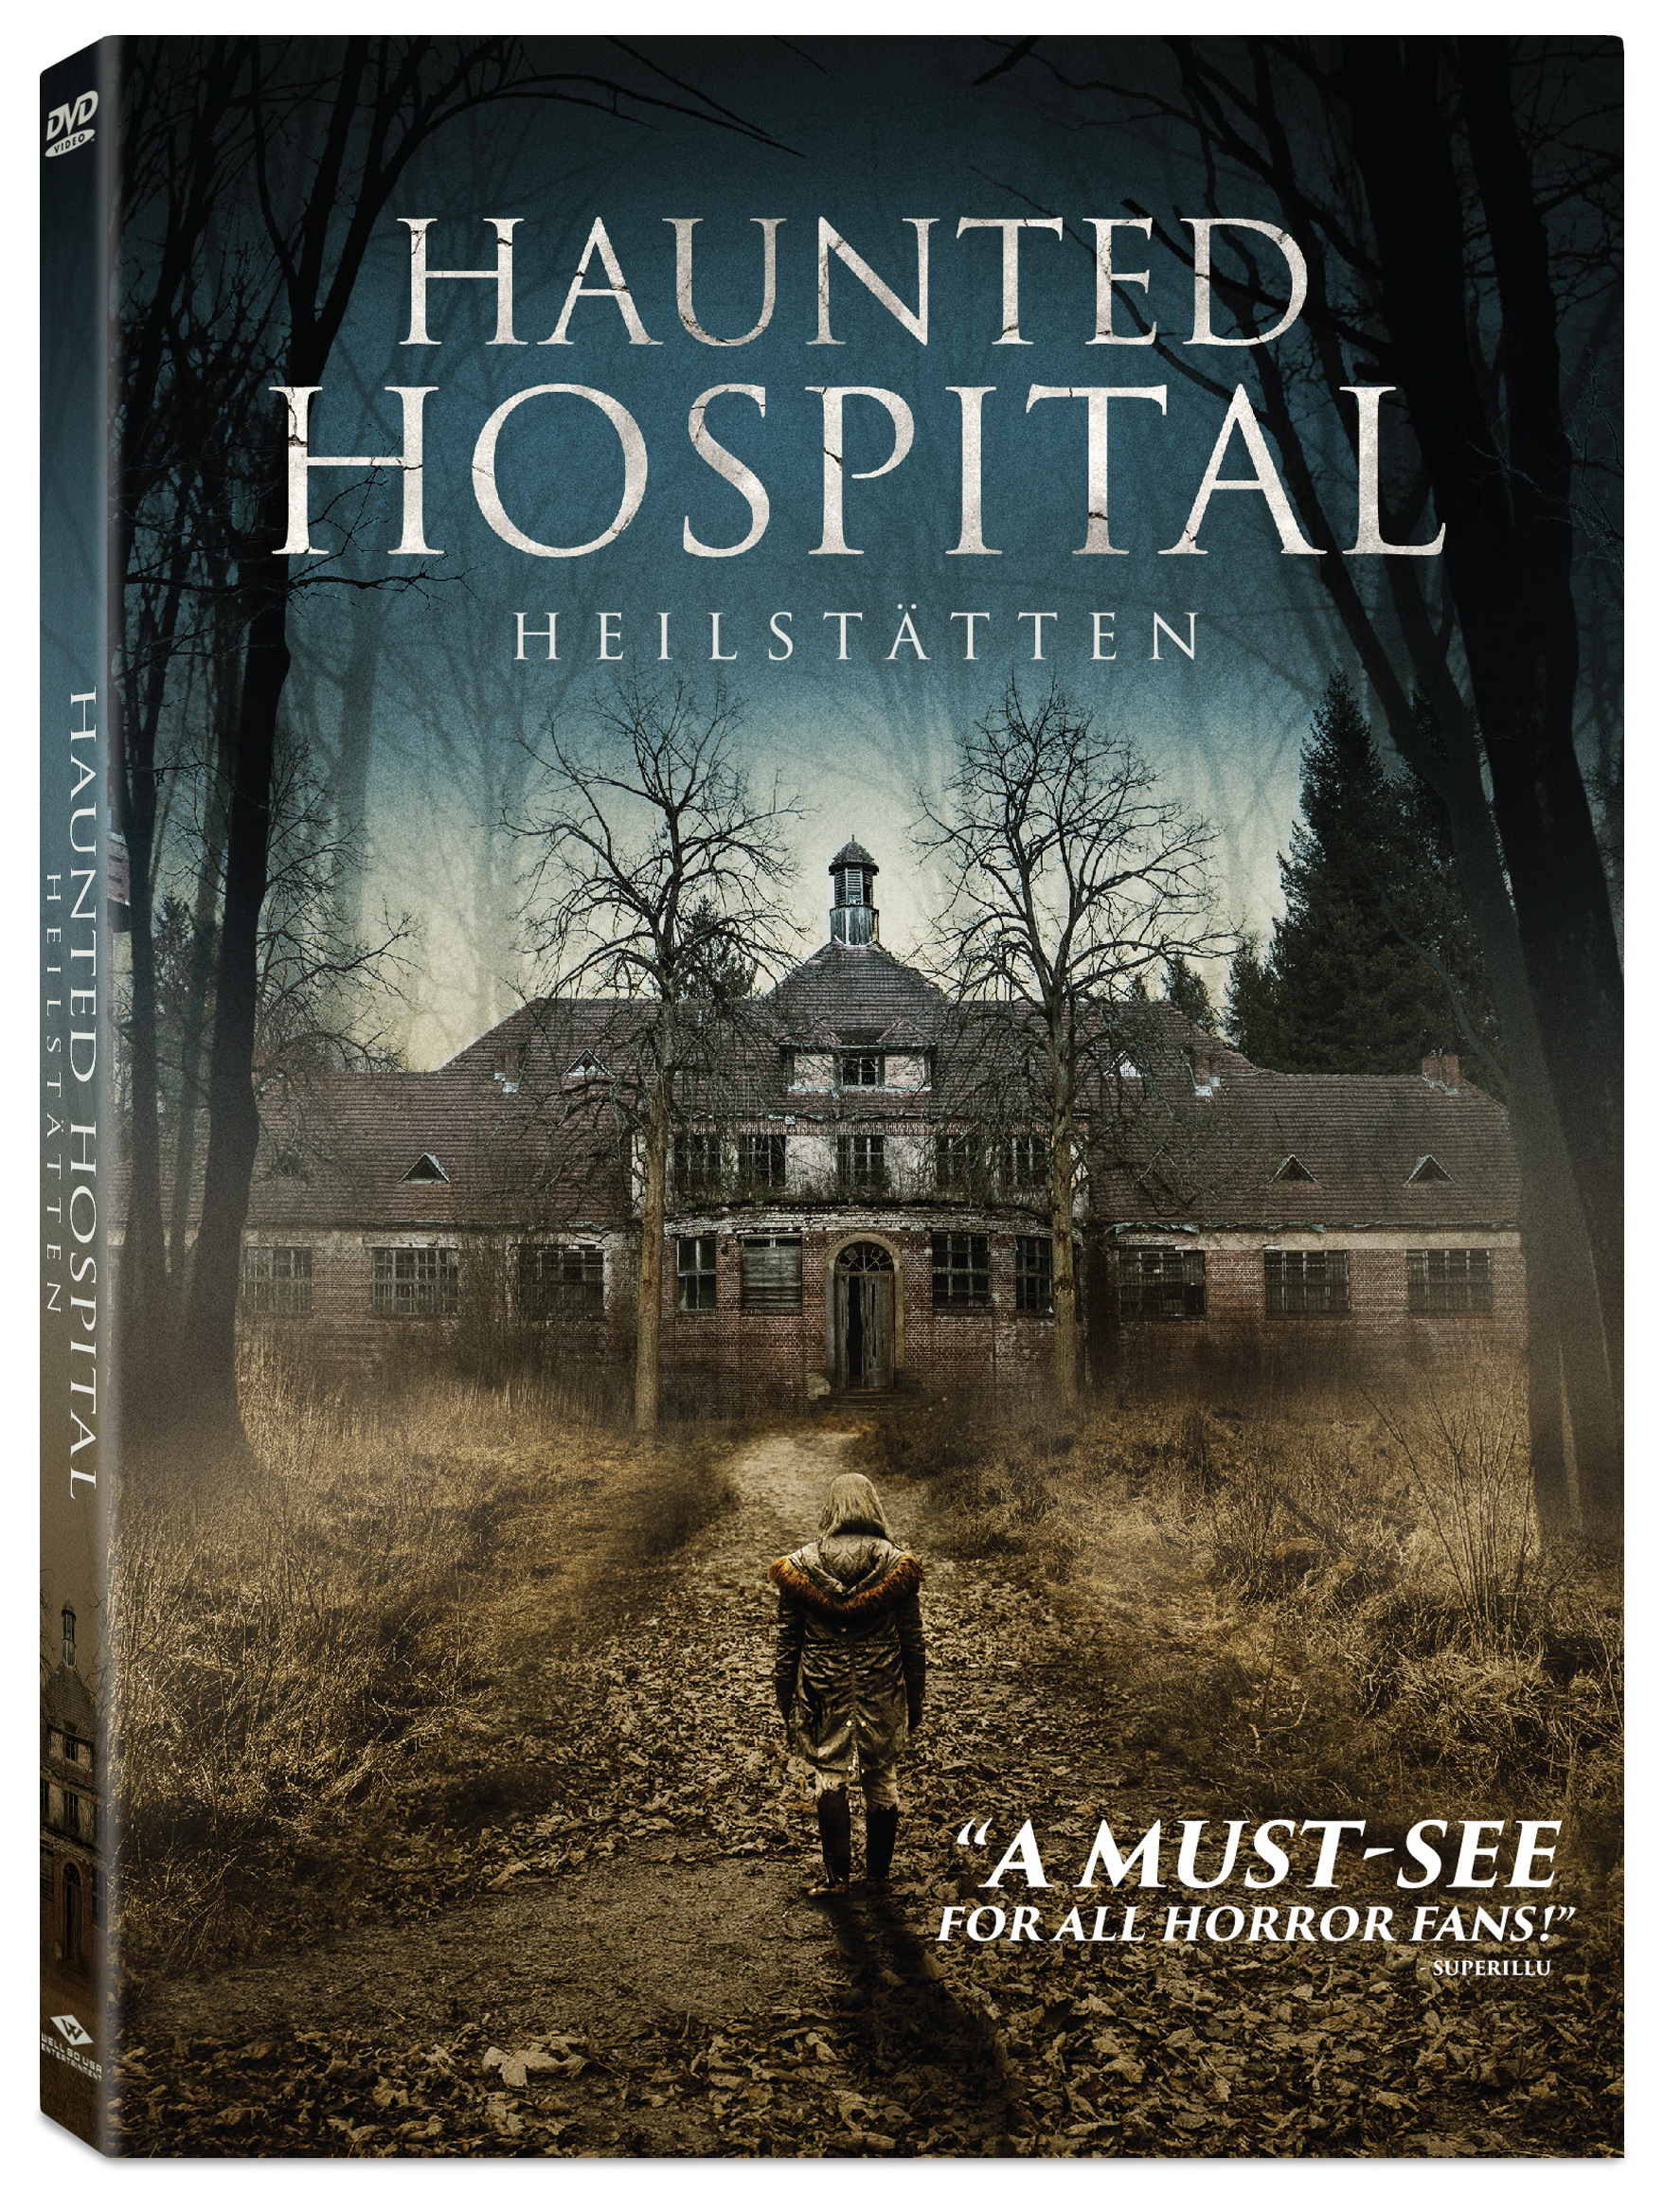 Haunted Hospital Heilstatten DVD cover (Well Go USA)